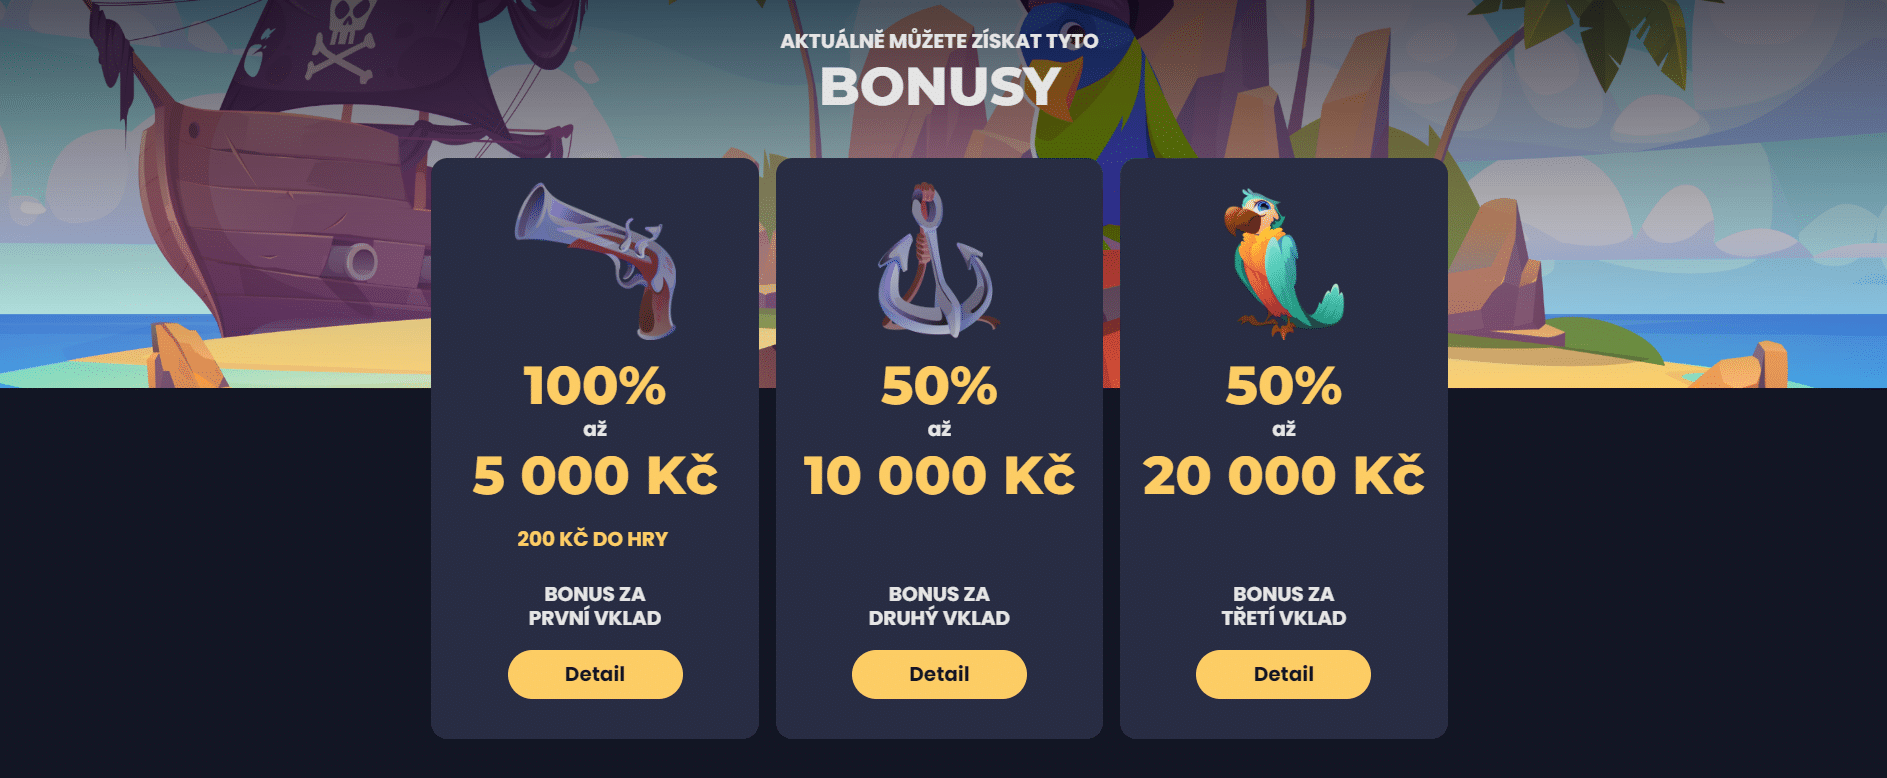 eCasino.cz bonusy